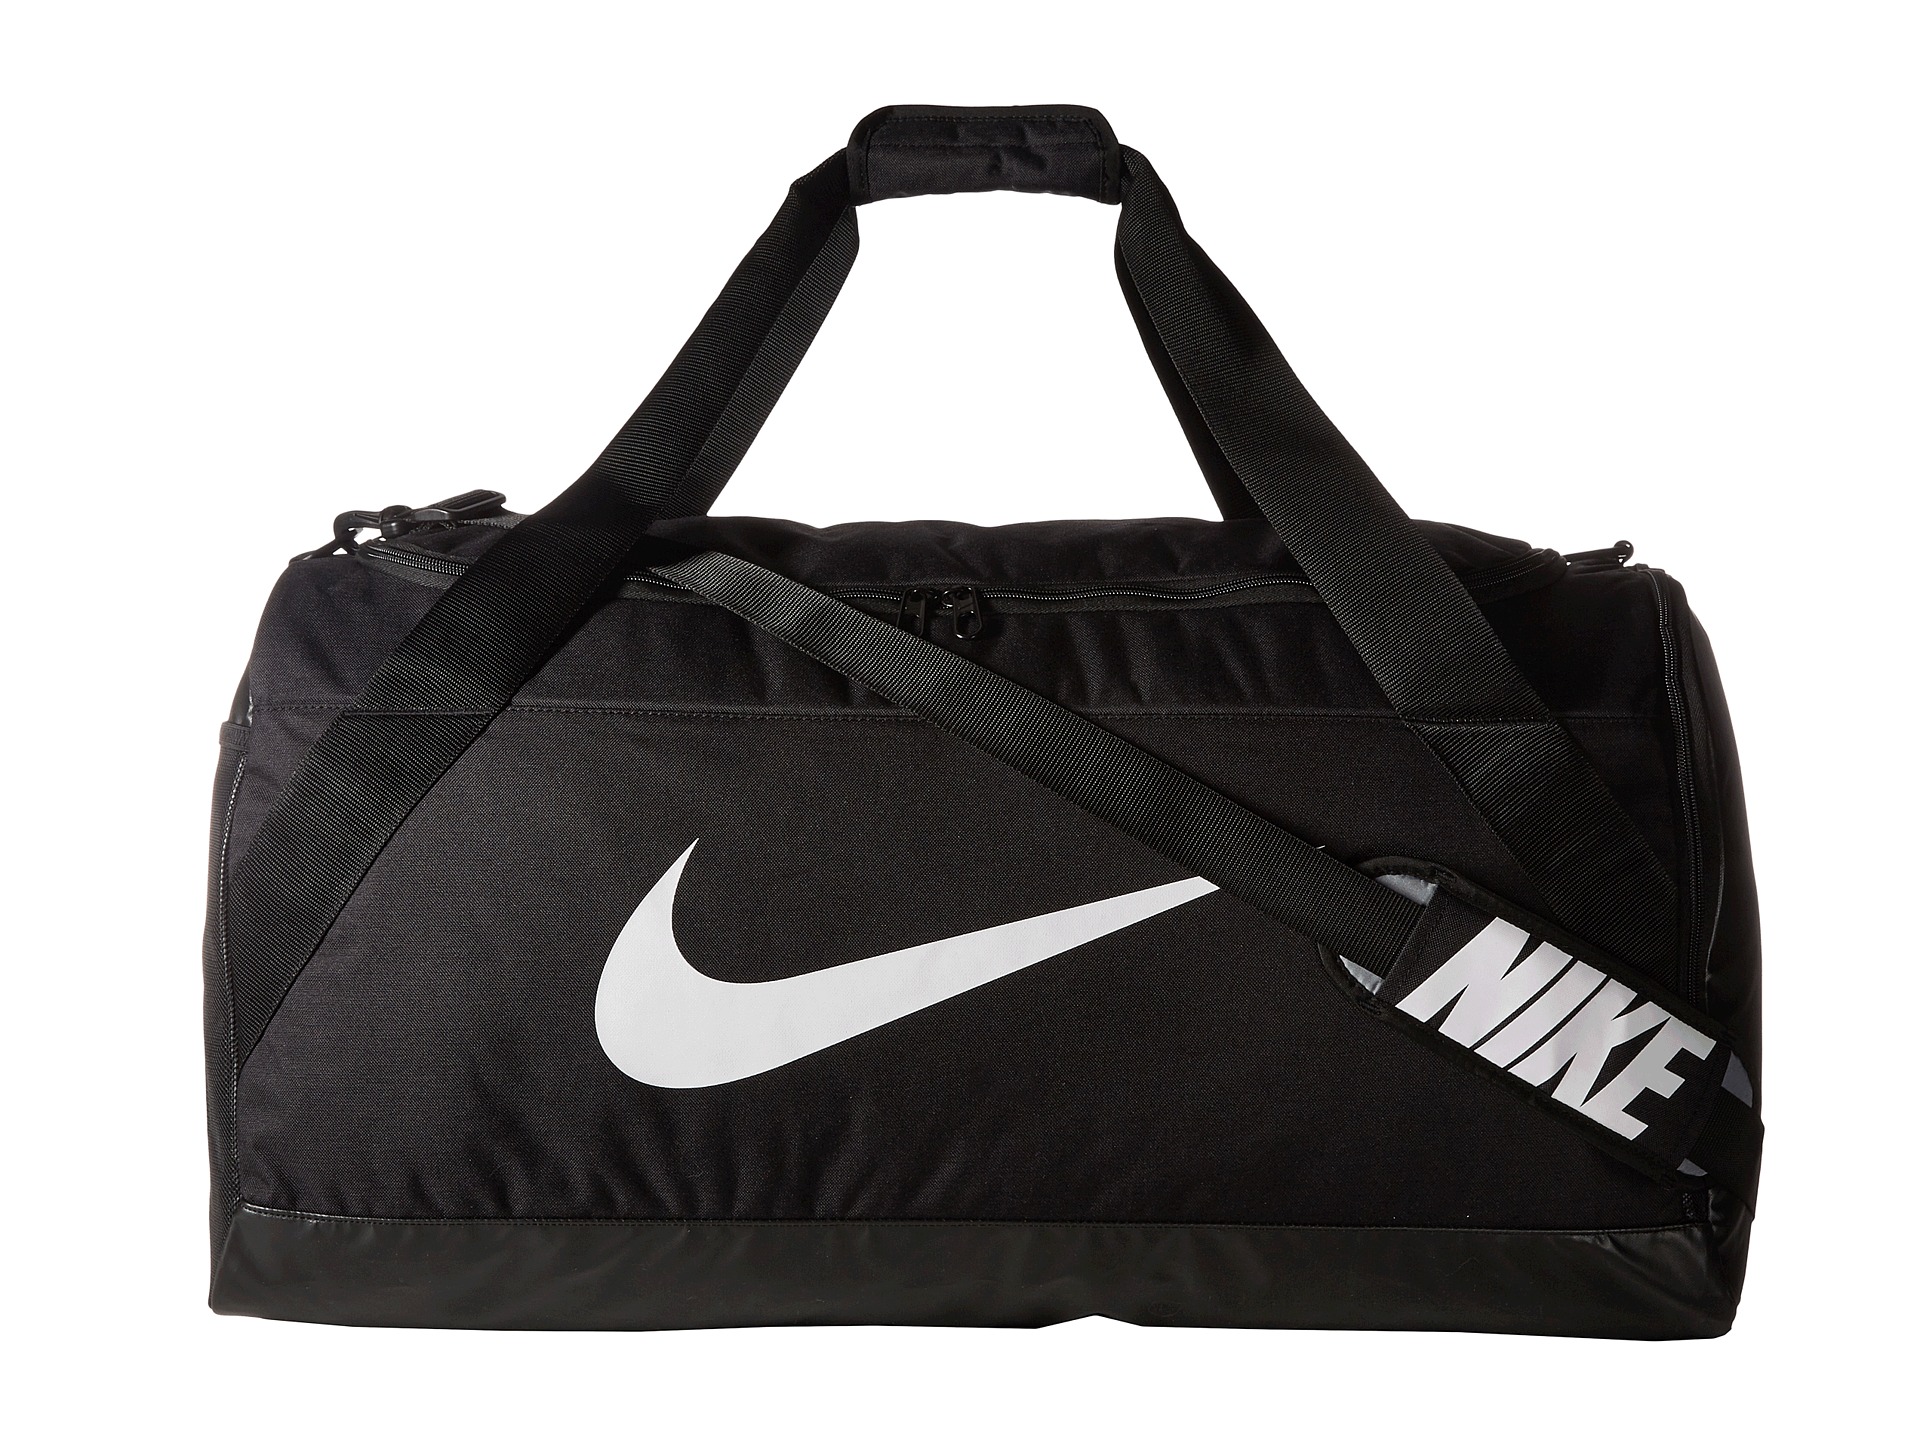 Nike Brasilia Extra Large Duffel Bag - 0 Free Shipping BOTH Ways